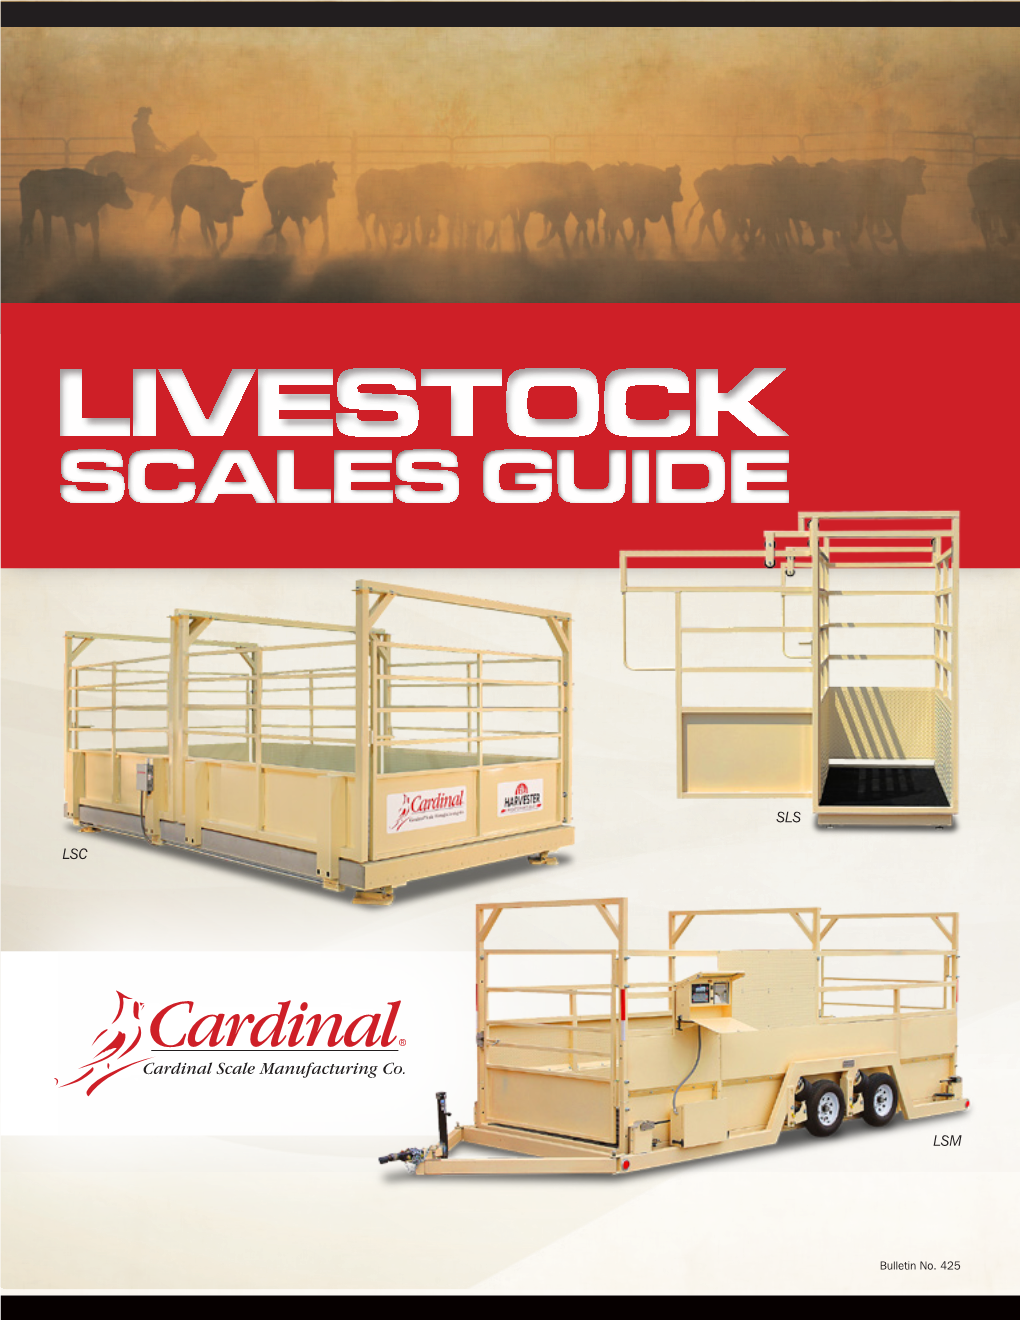 Livestock Scales Guide Brochure